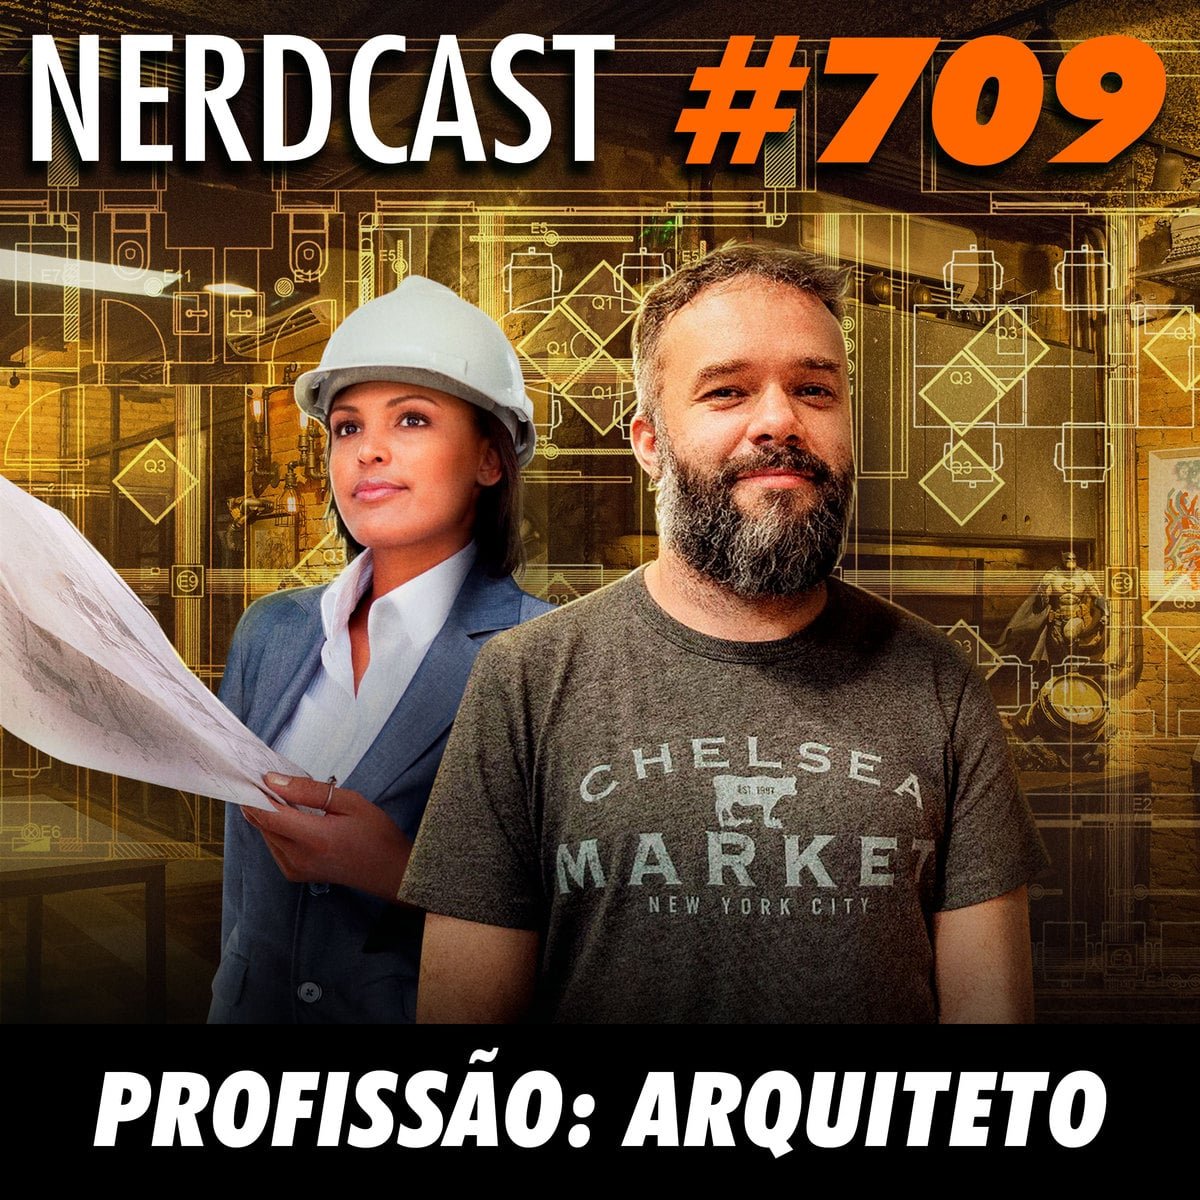 NerdCast 709 - Profissão: Arquiteto